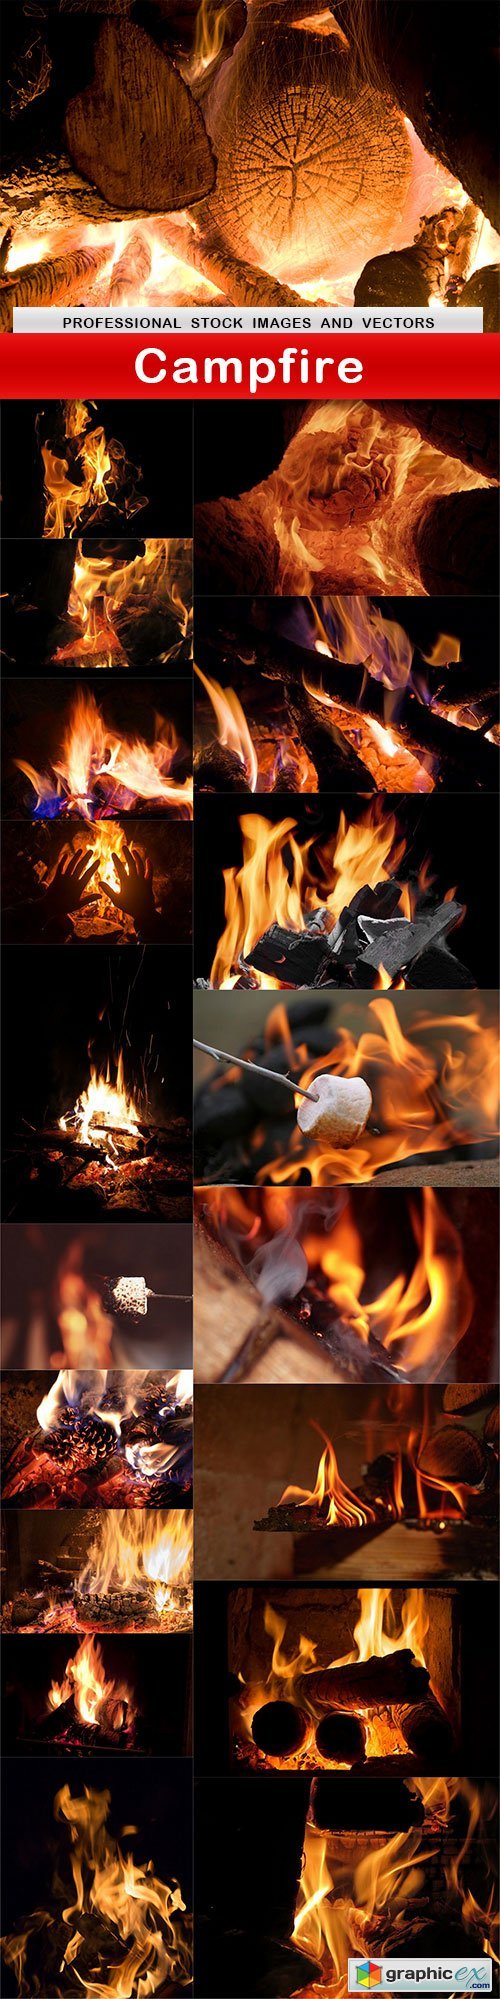 Campfire - 19 UHQ JPEG